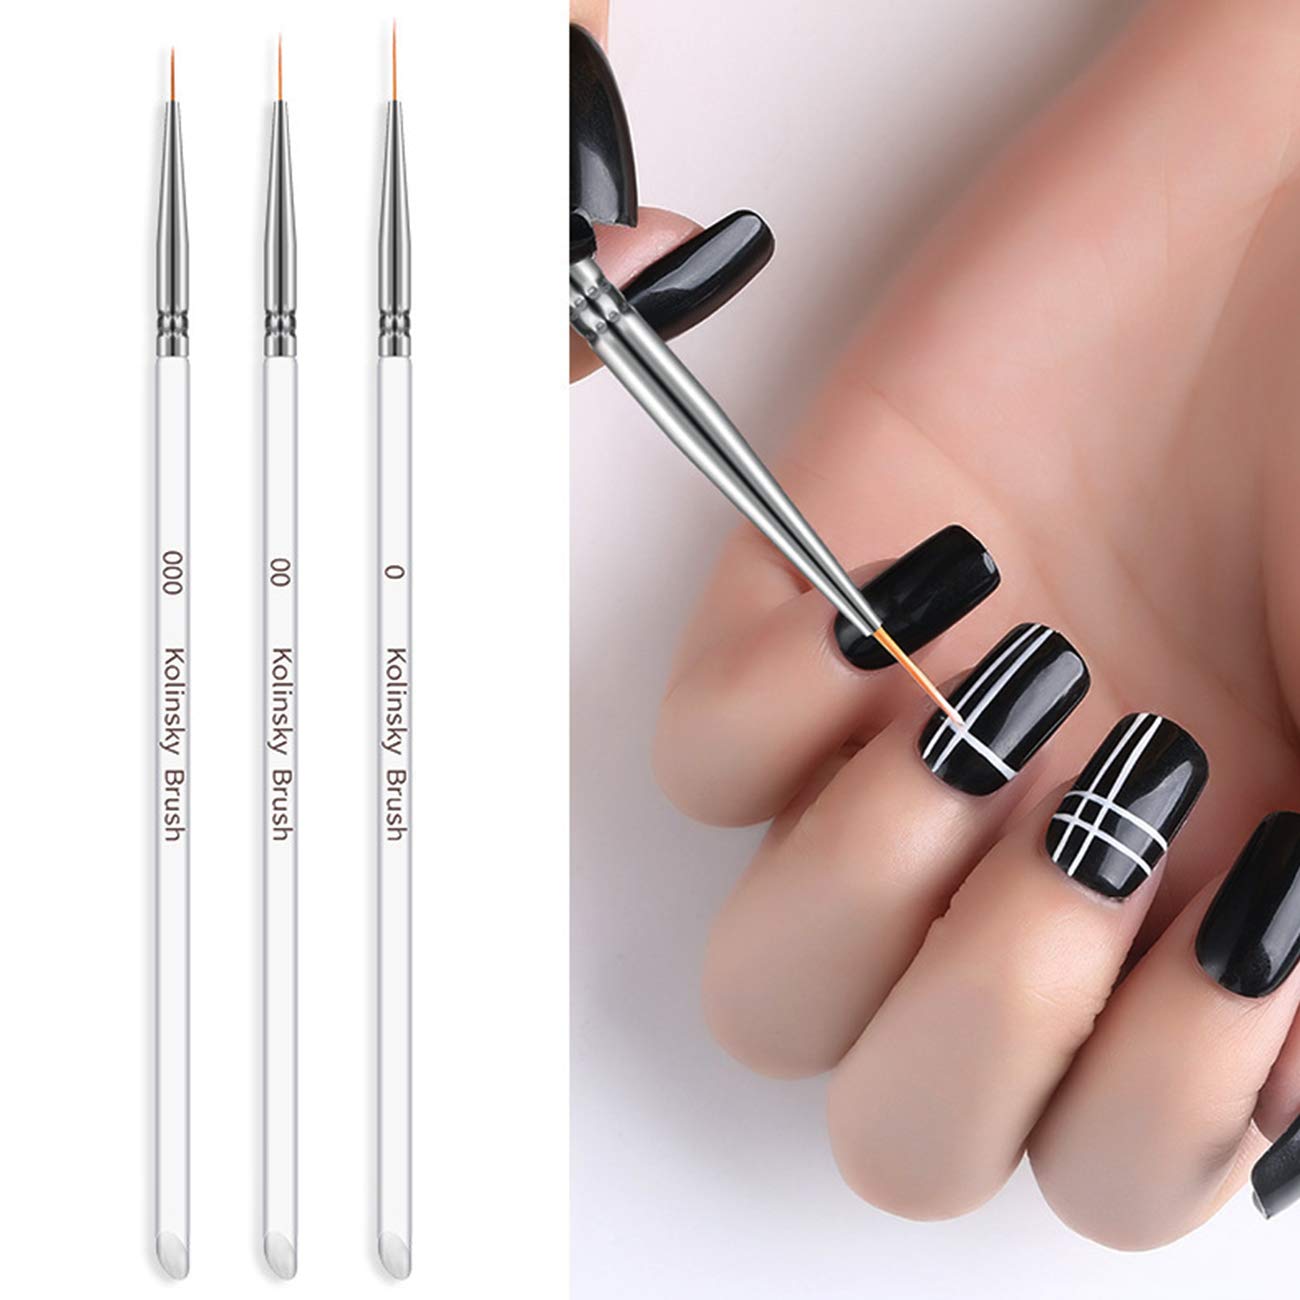 Tinsow 3pcs Professional Nail Art Brush Set Liner Pens Striping Brushes for  Short Strokes Details Blending Elongated Lines etc